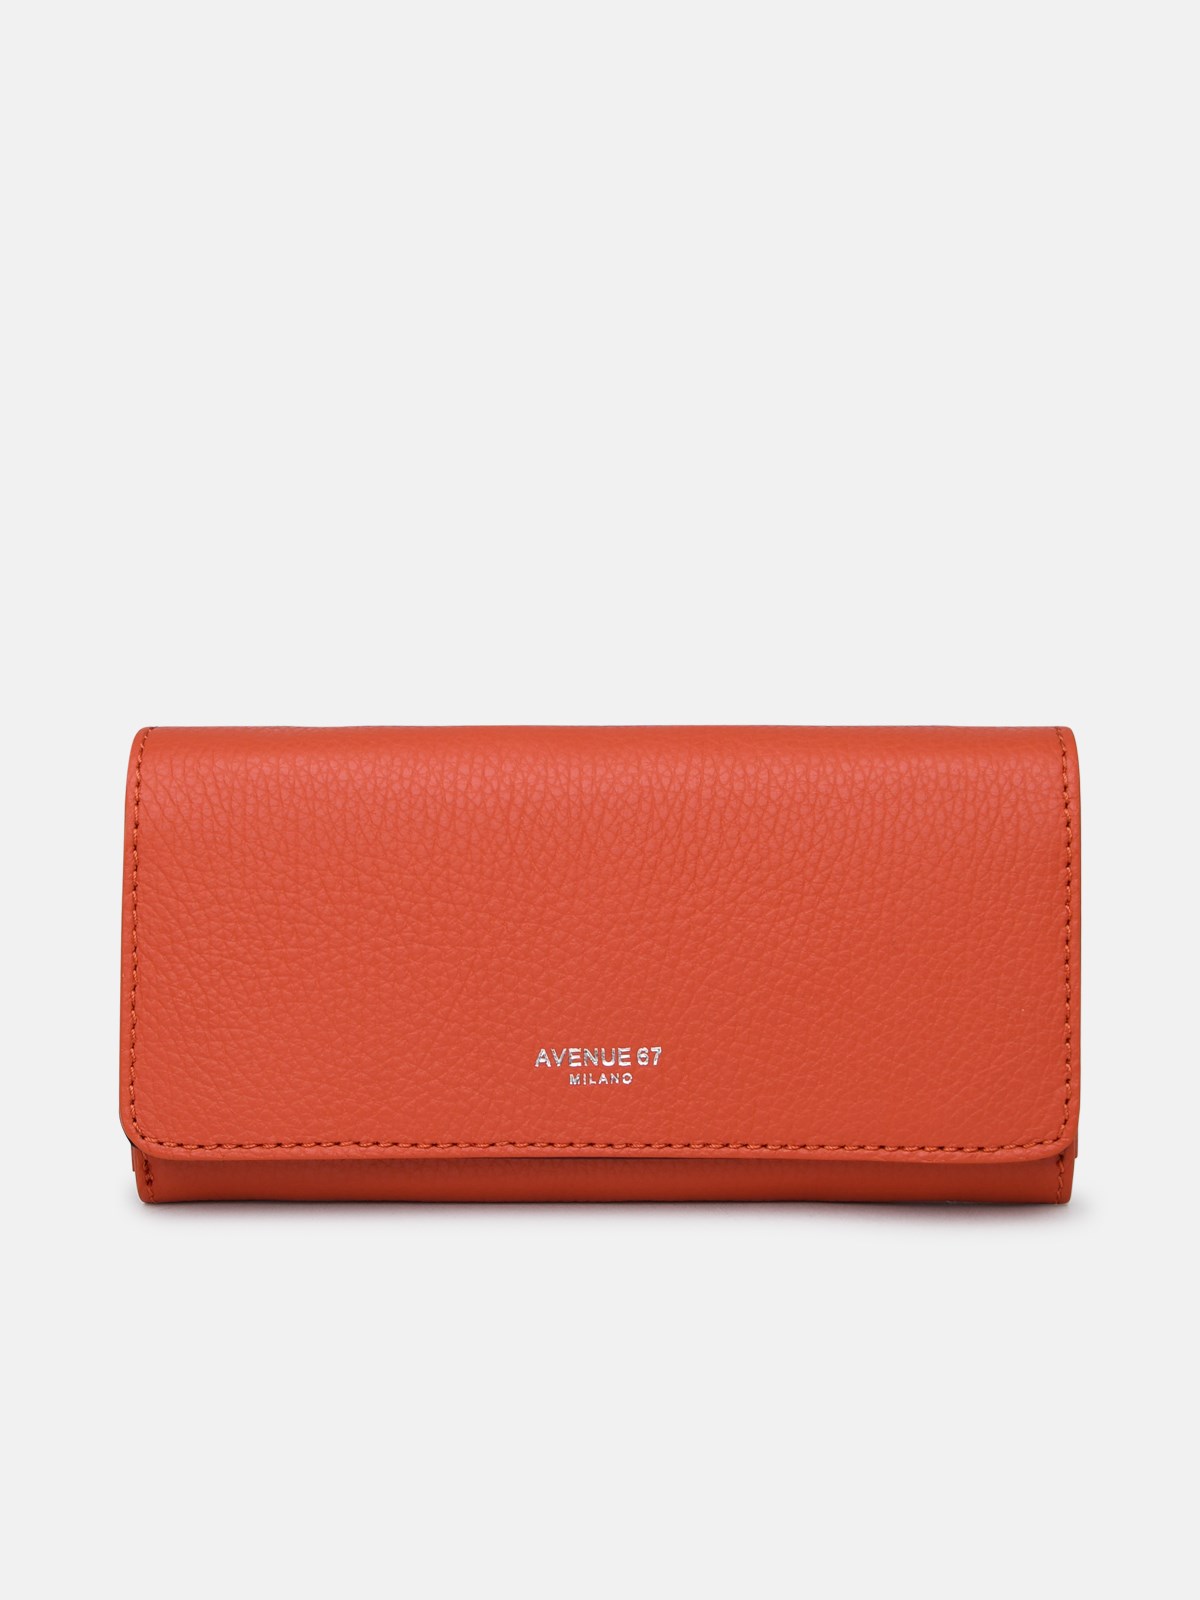 Avenue 67 Orange Leather Wallet